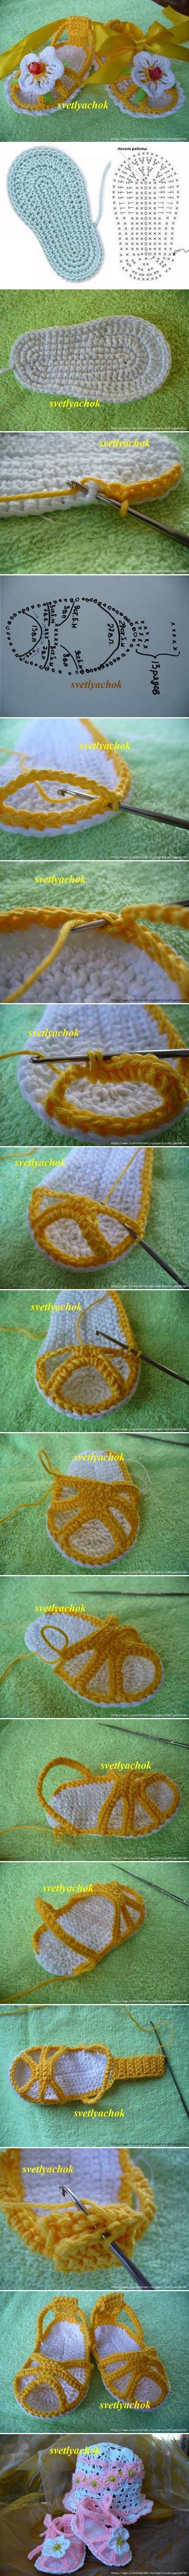 DIY Crochet Baby Sandal with Flower Decor - DIY Tutorials